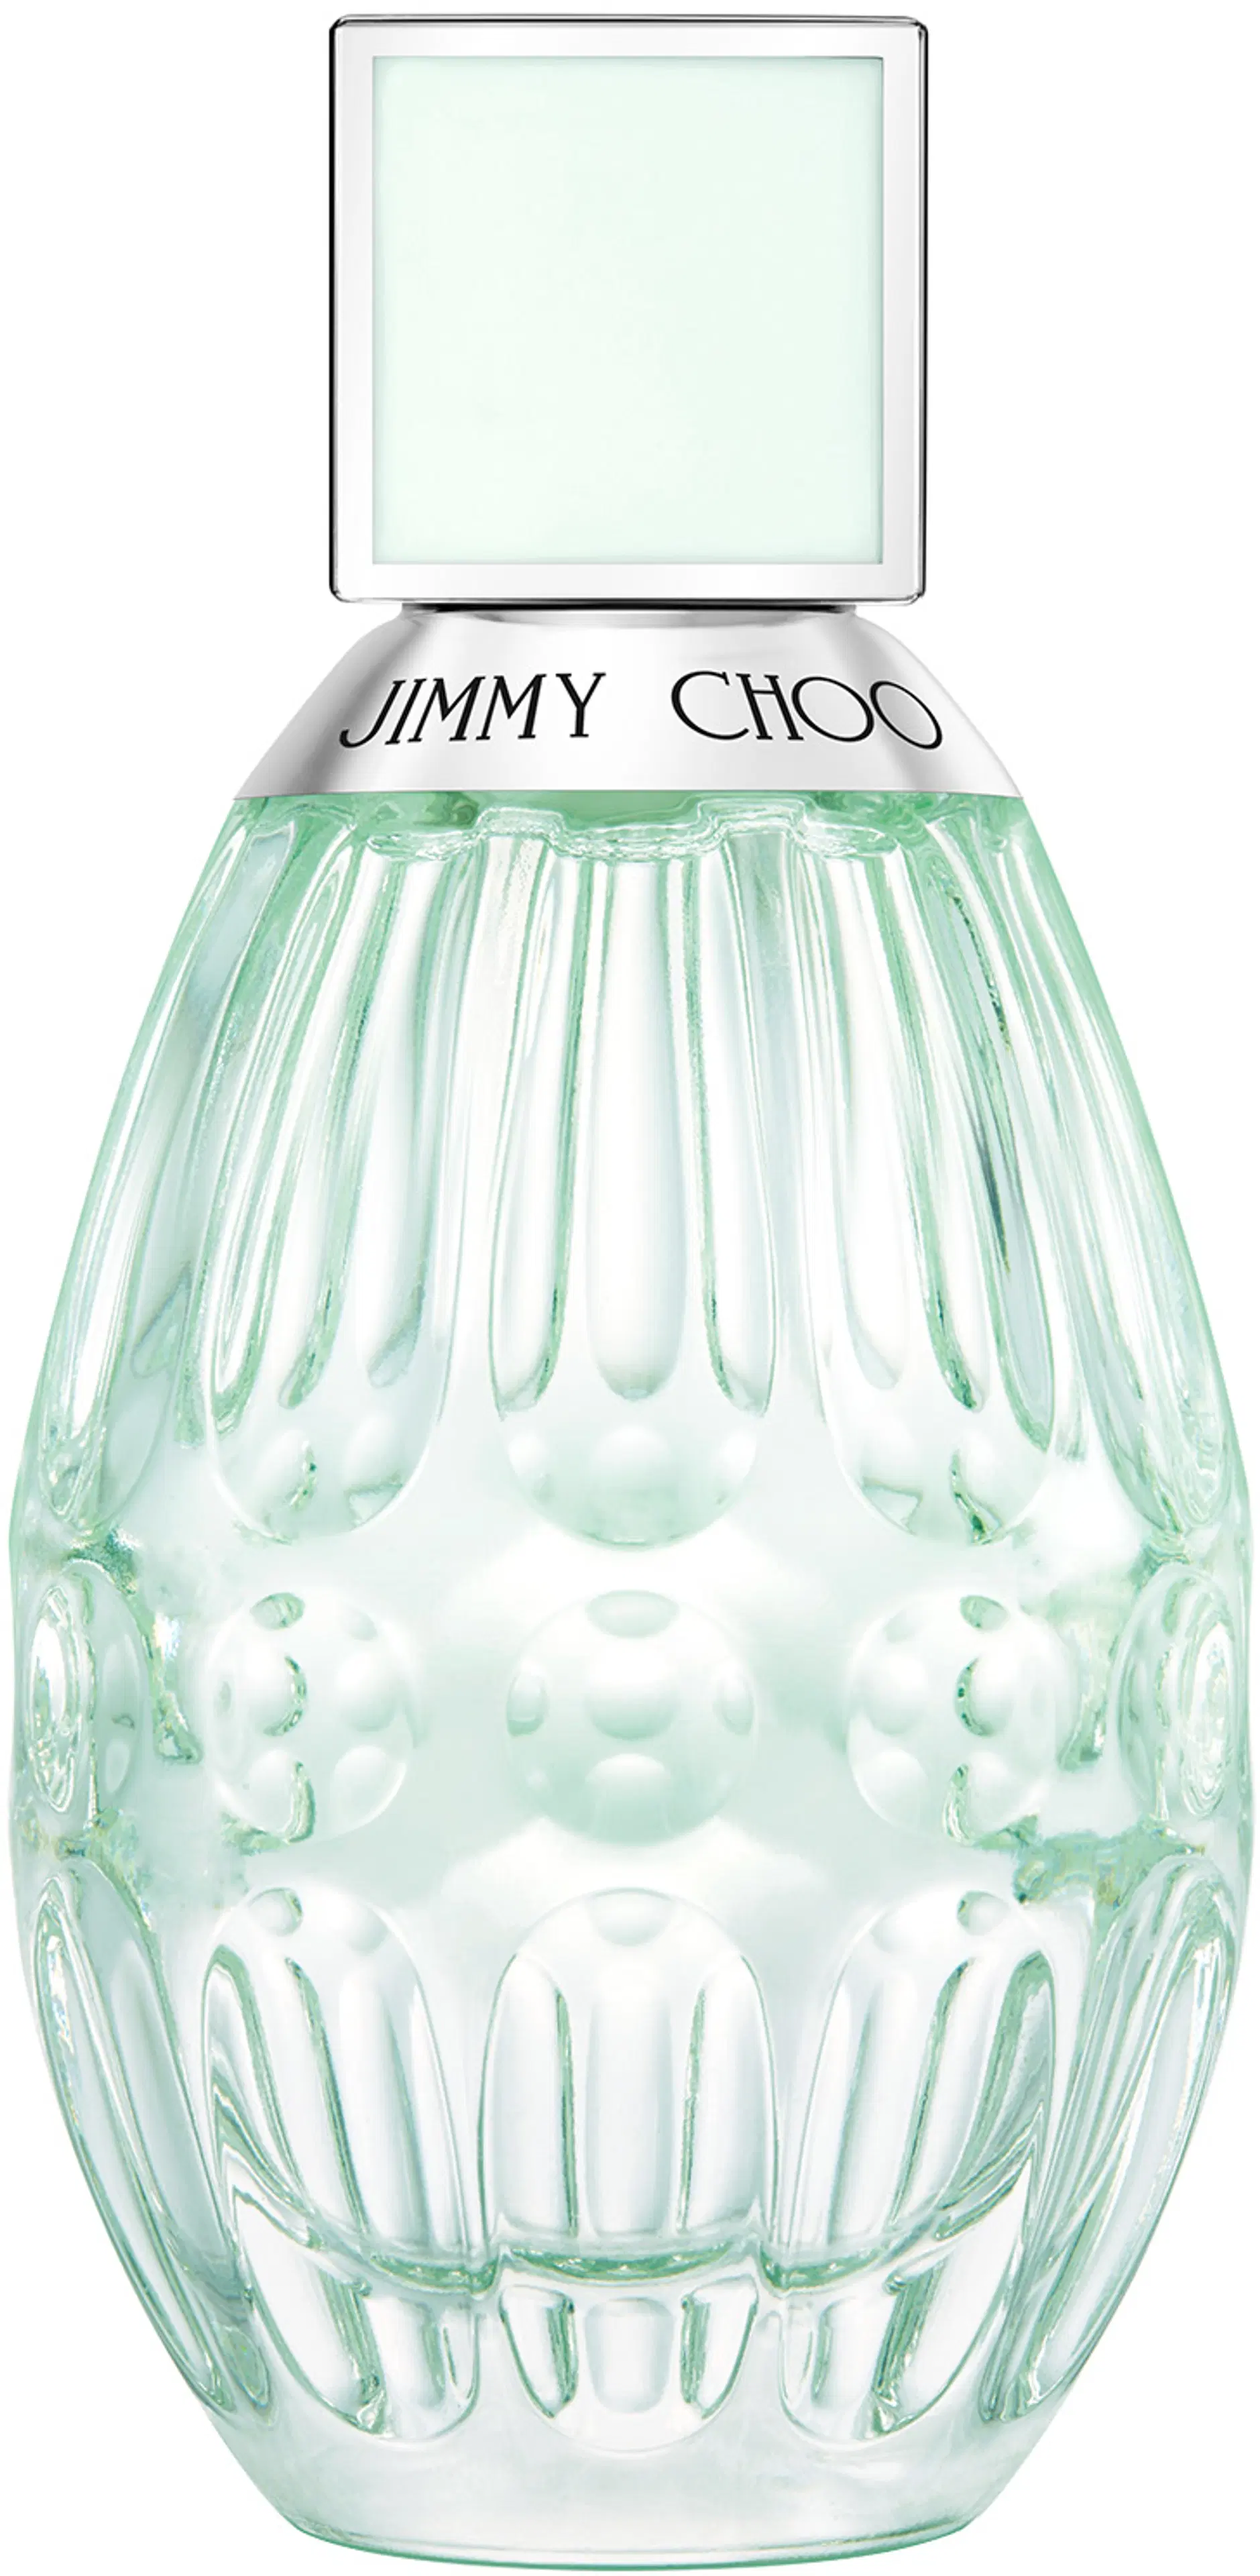 Jimmy Choo Floral EdT tuoksu 40 ml